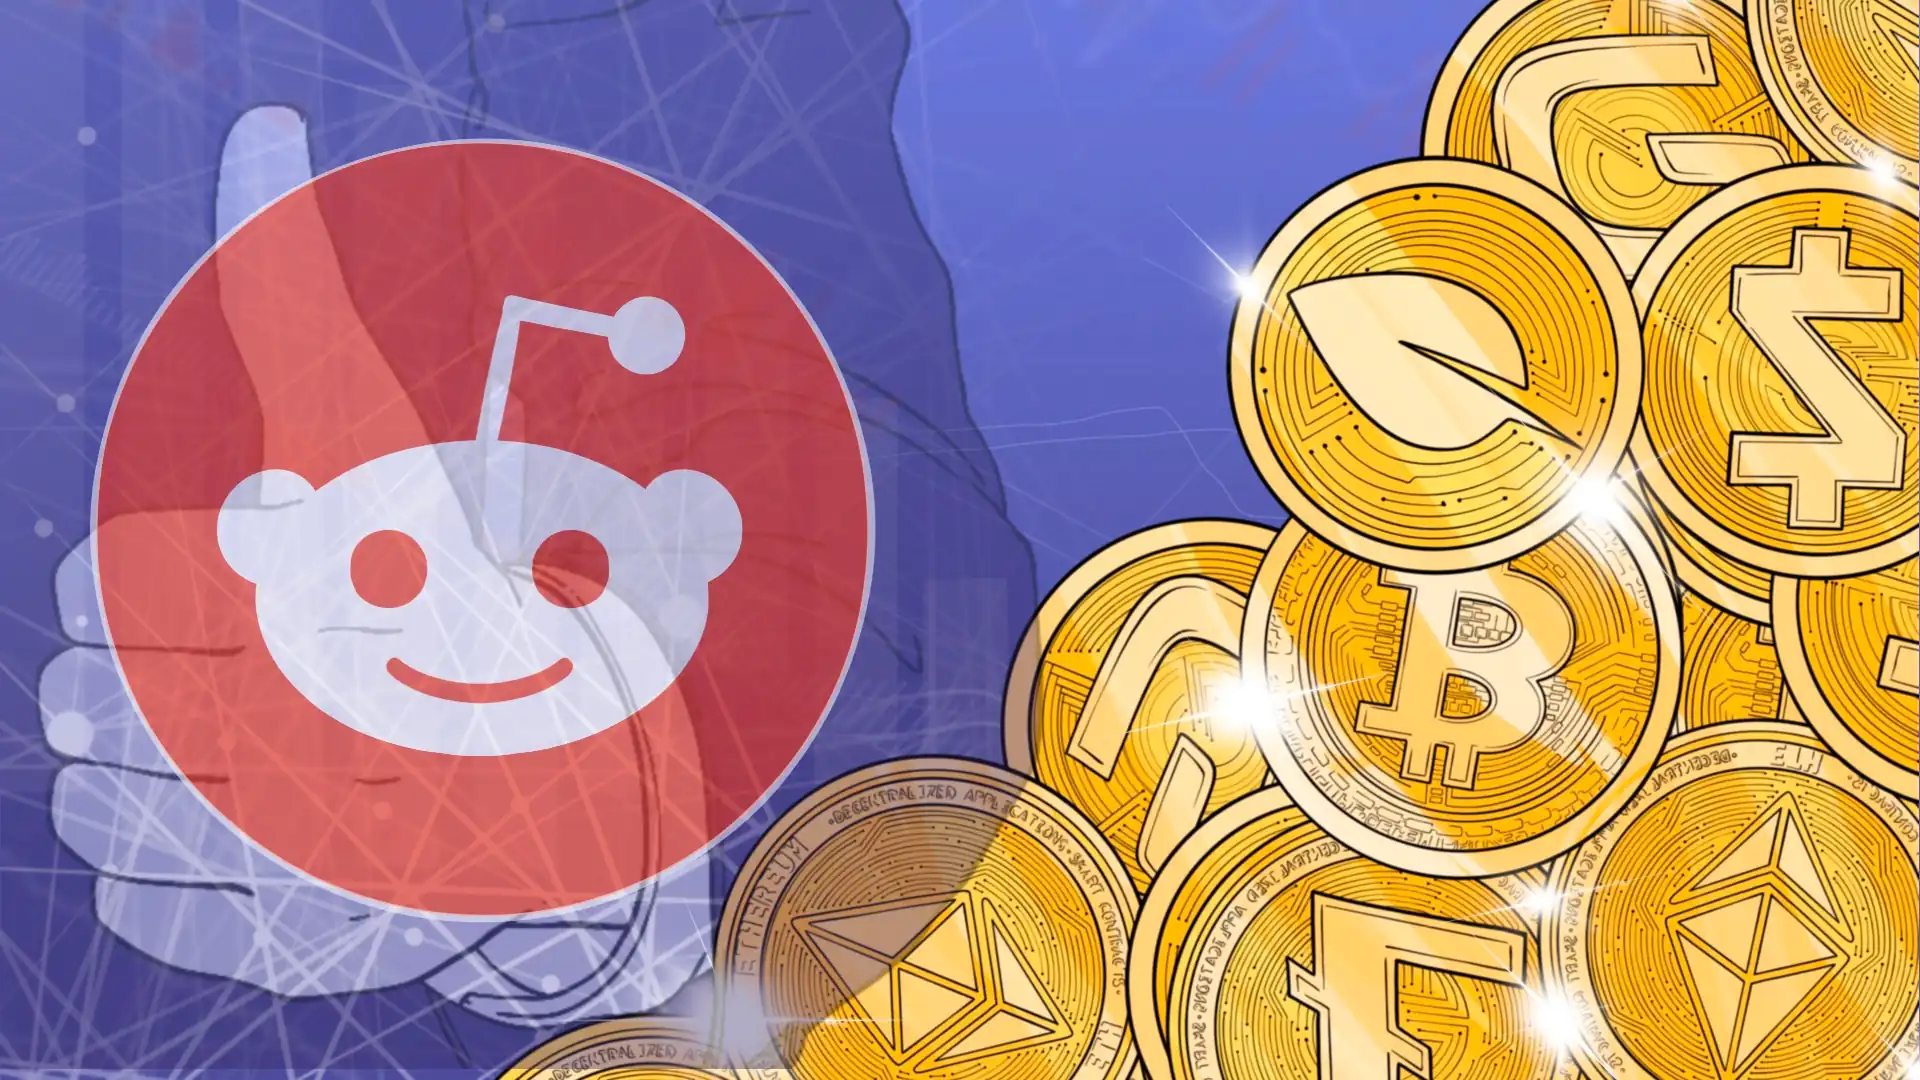 Reddit's Strategic Crypto Investments and Blockchain Plans